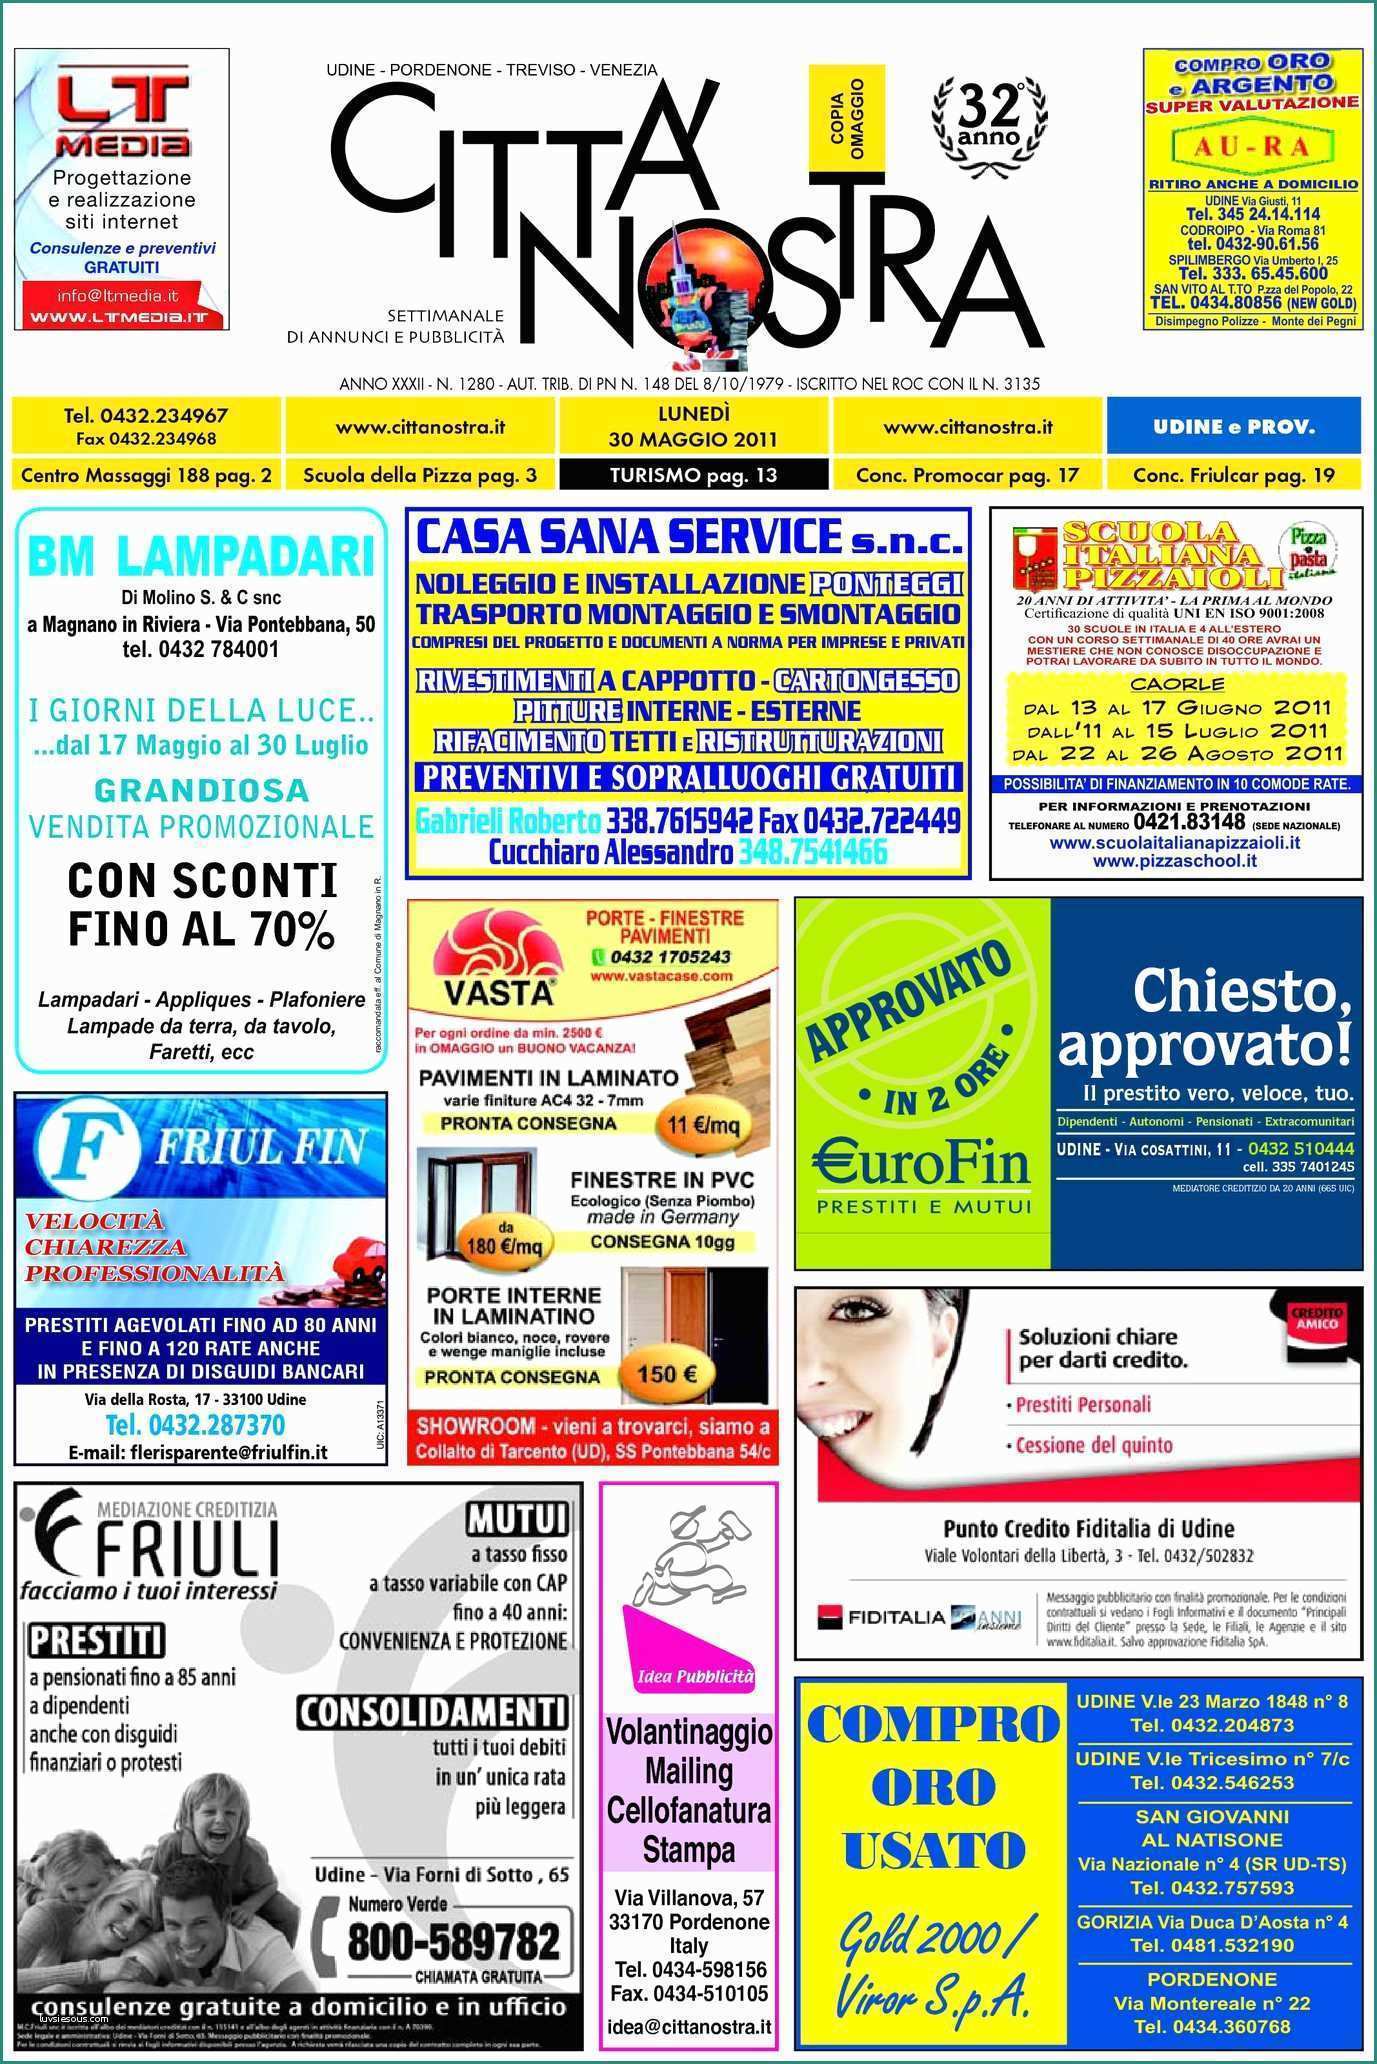 Ventilatori Industriali Prezzi E Calaméo Citt  Nostra Udine Del 30 05 2011 N 1280